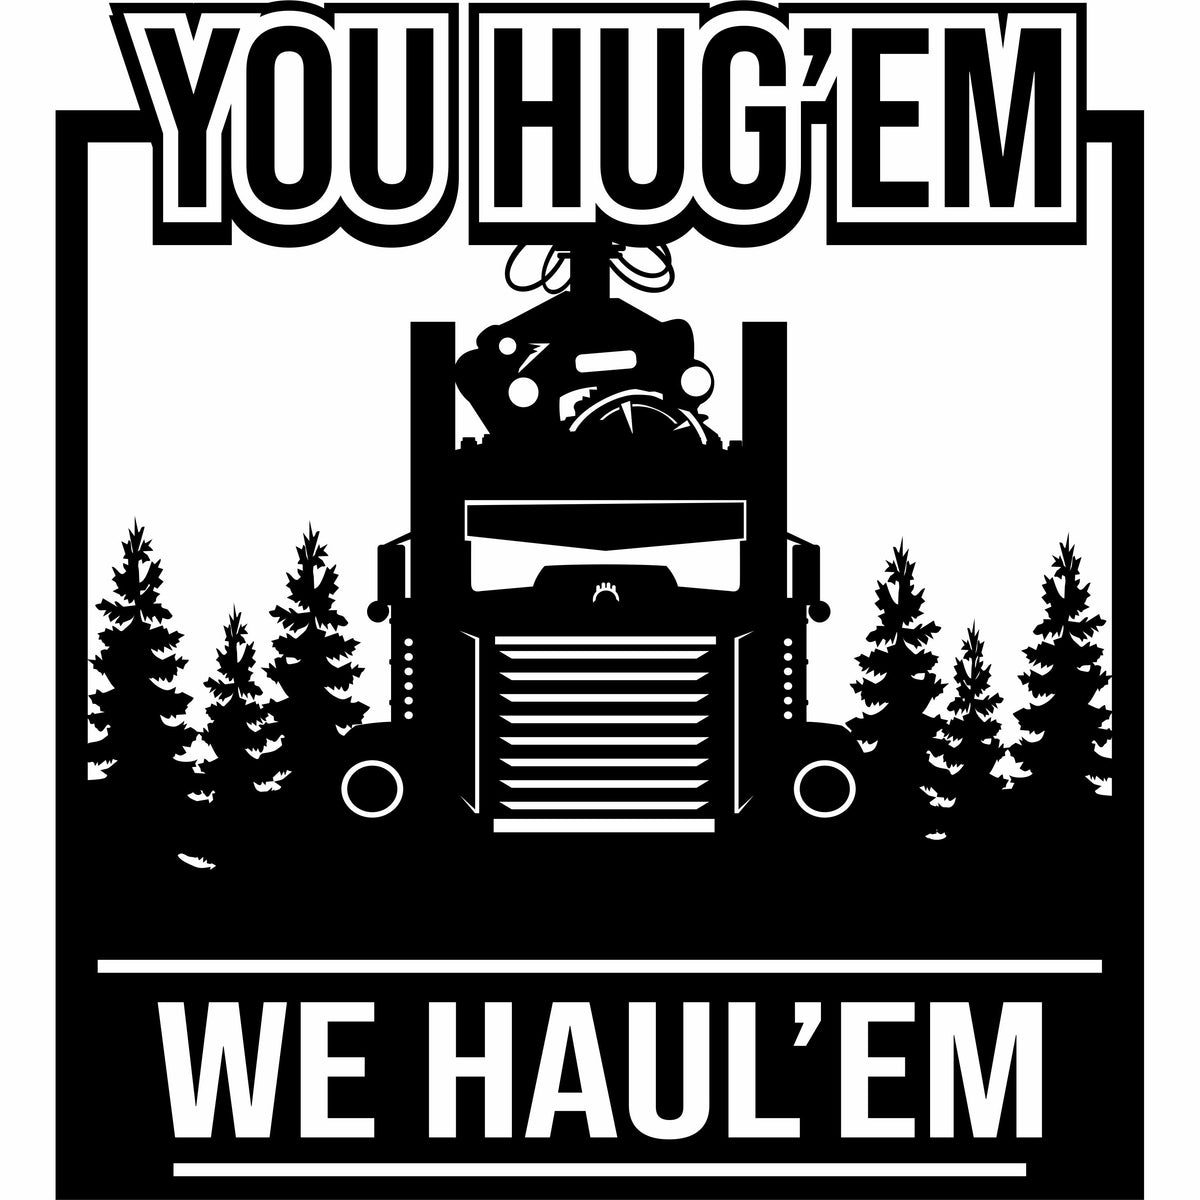 You Hug'em We Haul'em KW Log Hauler Vinyl Decal Free Shipping